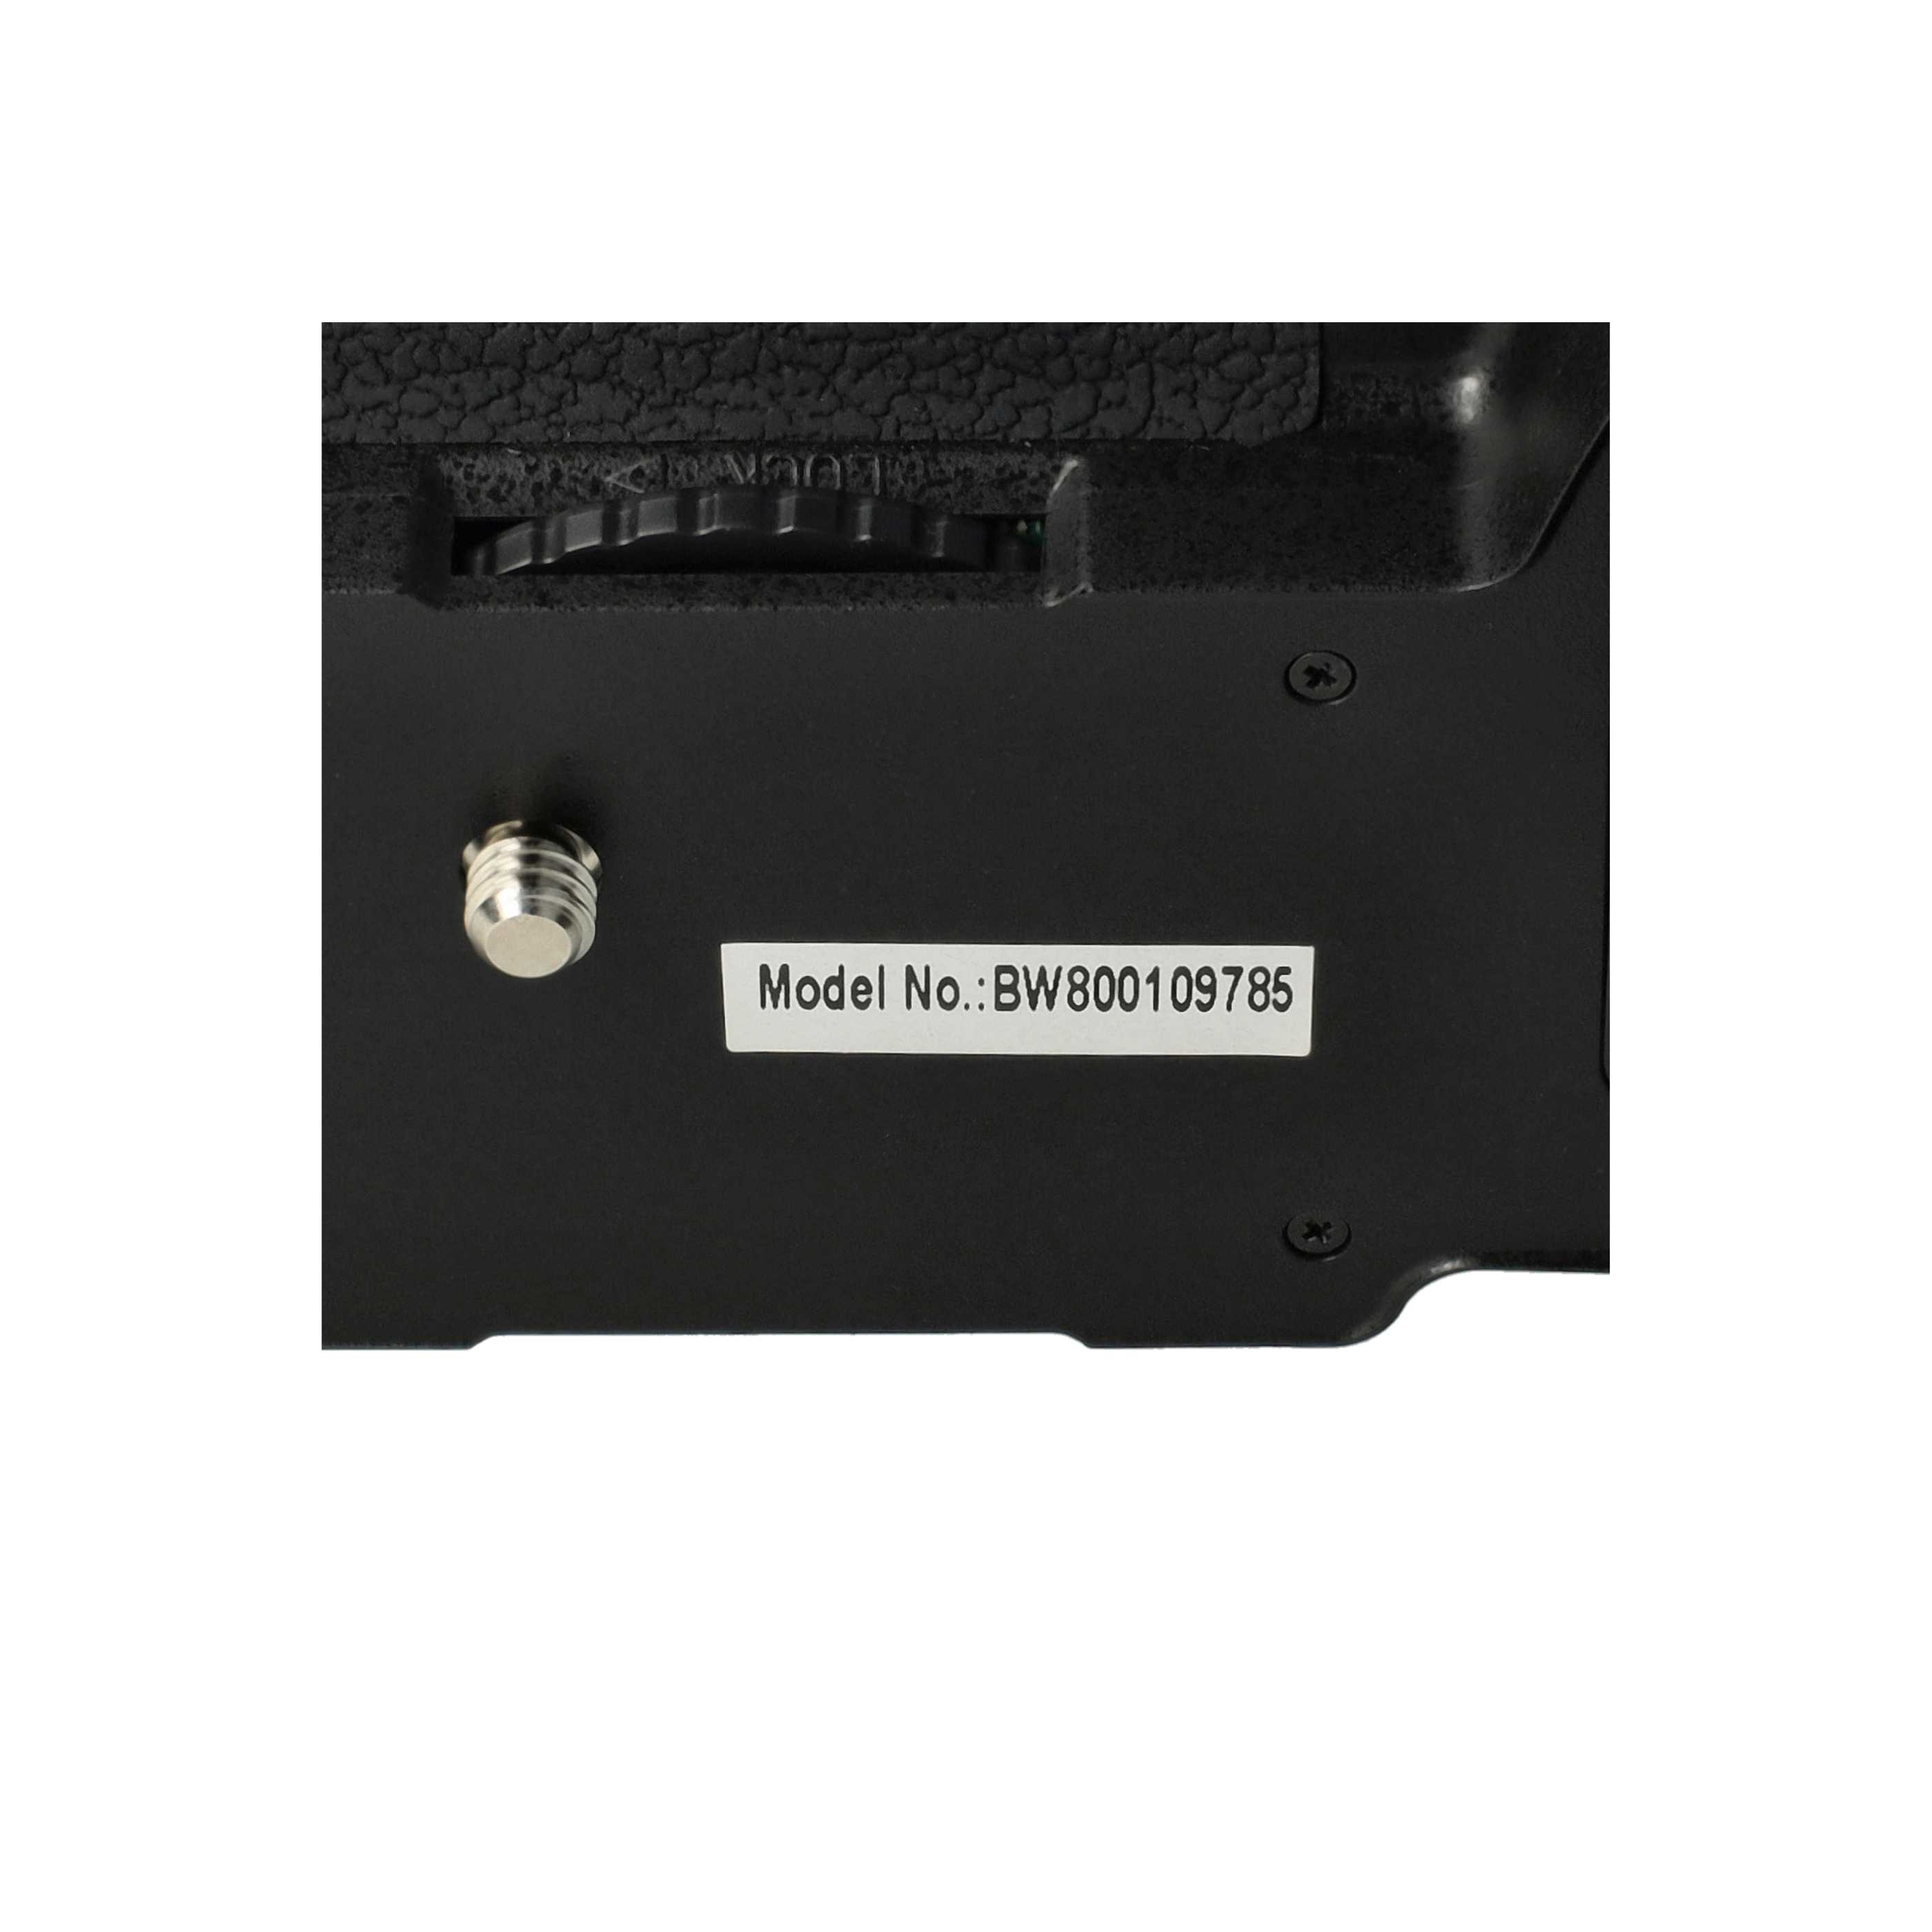 Battery Grip suitable for Nikon D5100, D5200, D5300 Camera - Incl. Mode Dial, Incl. Trigger